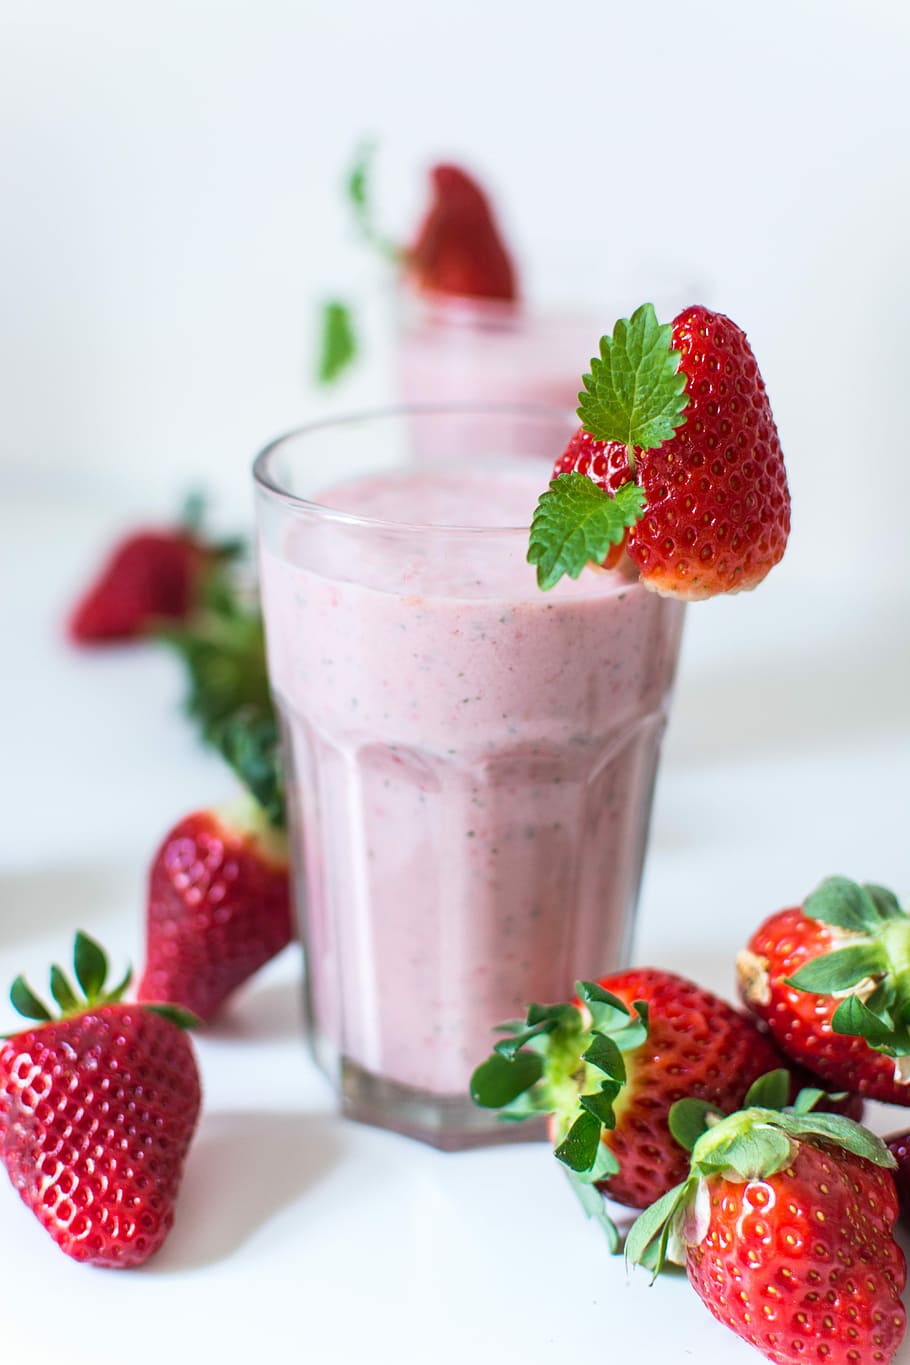 strawberry mint milkshake, Strawberry, mint, milkshake, close up, colorful, drink, homemade, strawberries, white background